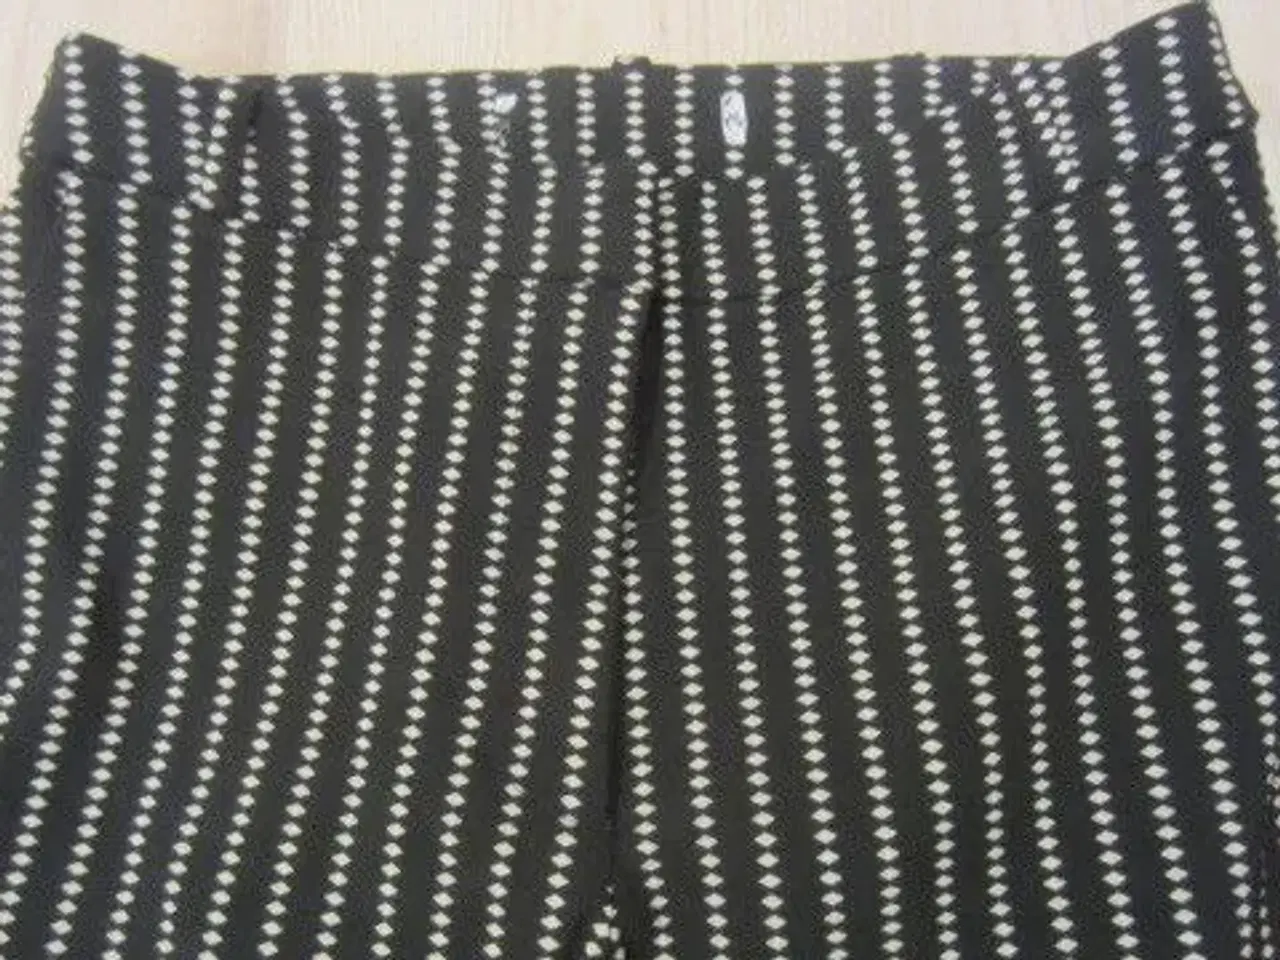 Billede 2 - Str. M, EKSTREM elastiske bukser